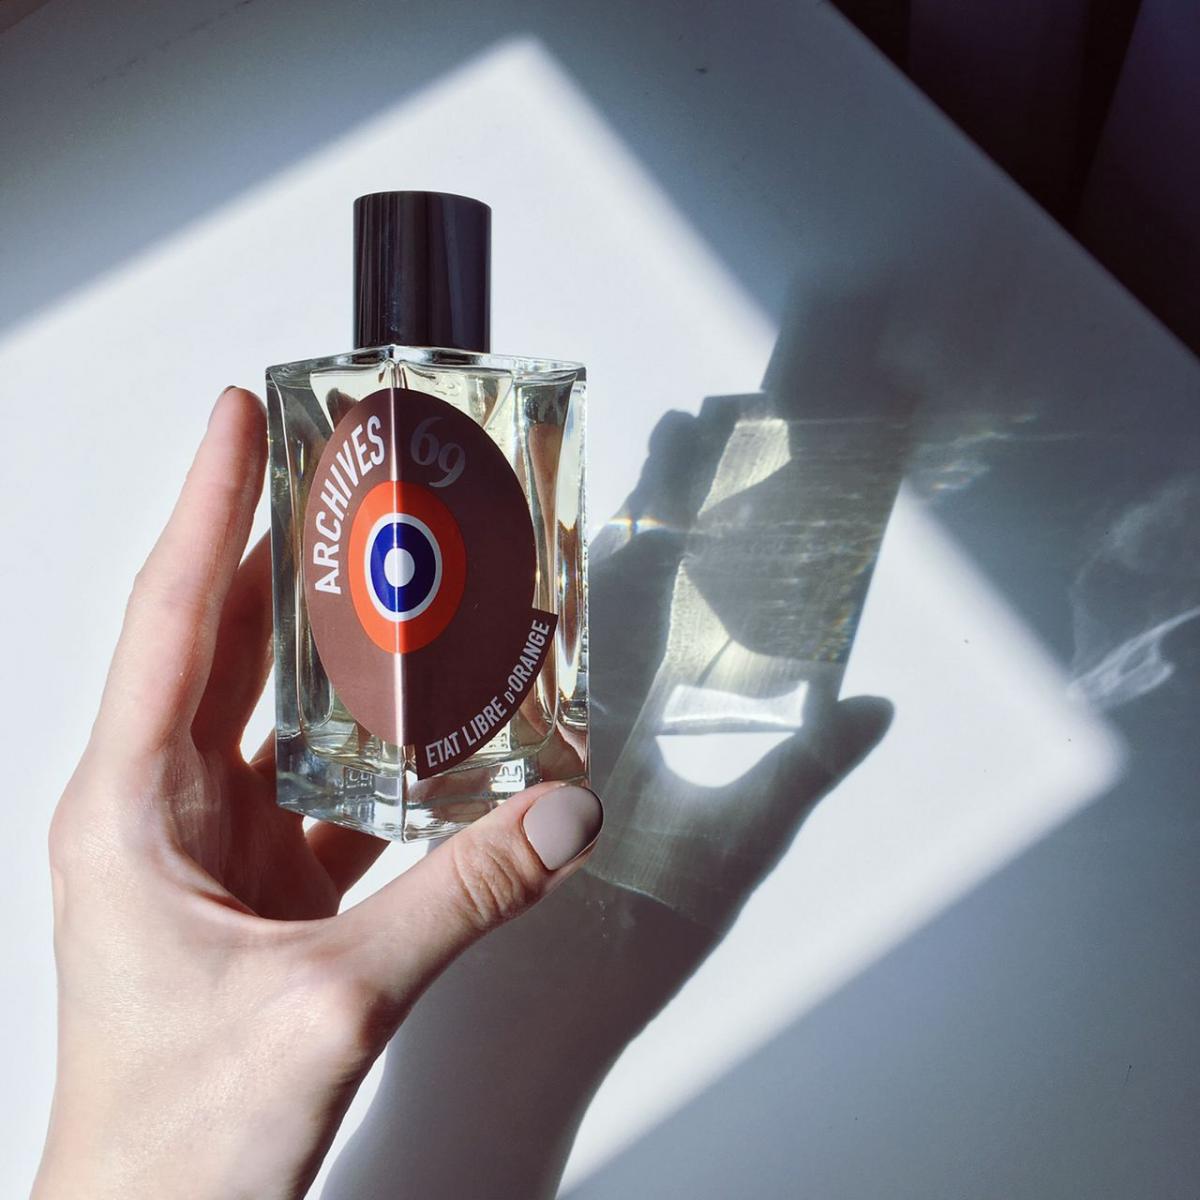 Archives 69 Etat Libre d'Orange perfume - a fragrance for women and men ...